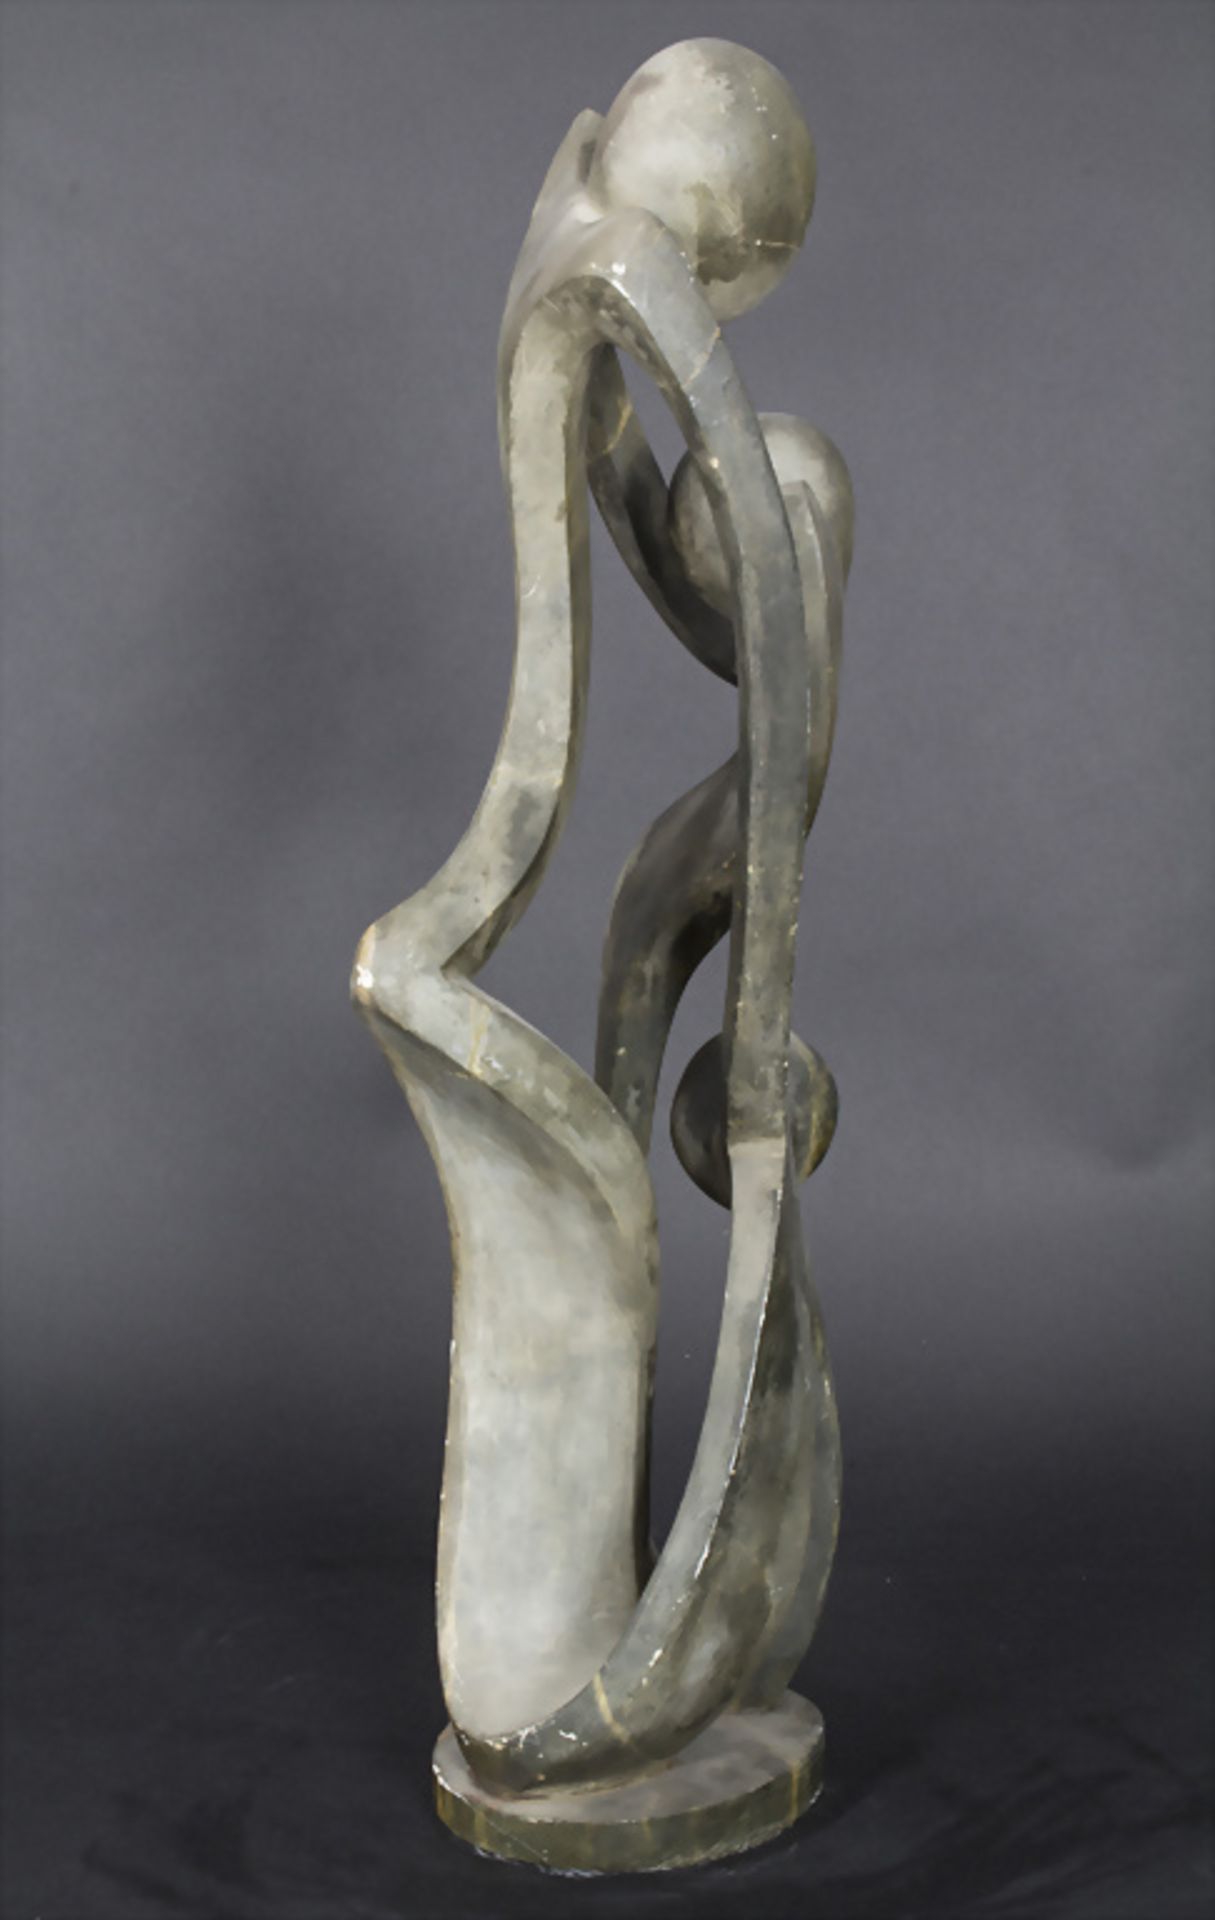 Shona-Figurengruppe / A shona figural group, südliches Afrika, 20. Jh. - Image 3 of 5